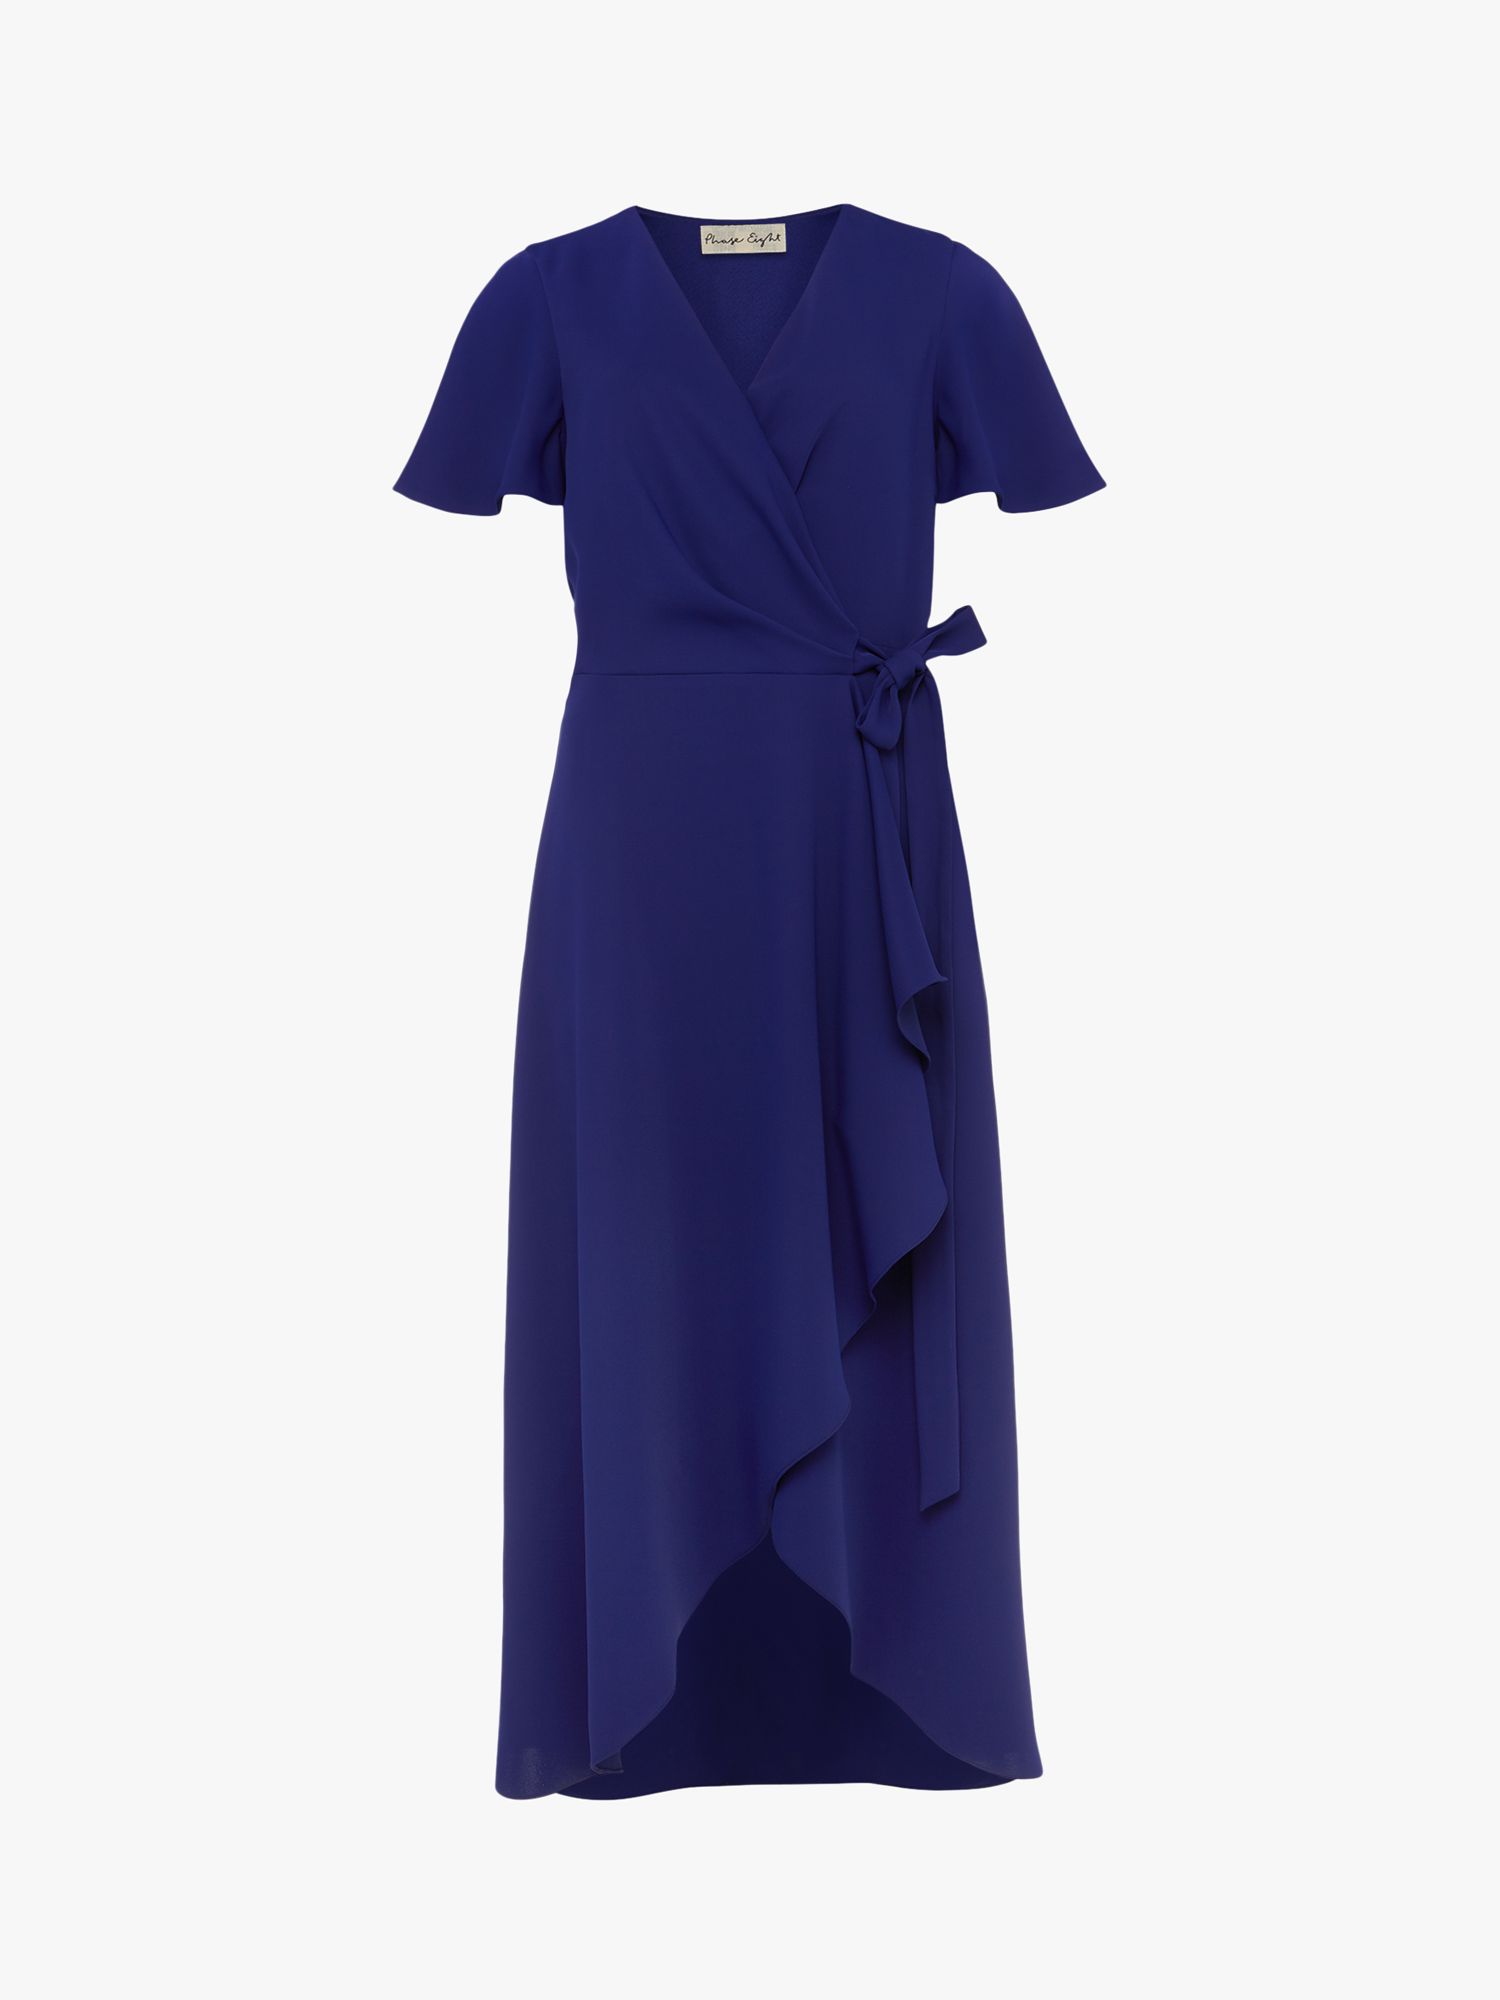 Phase Eight Julissa Wrap Dress, Royal Blue at John Lewis & Partners